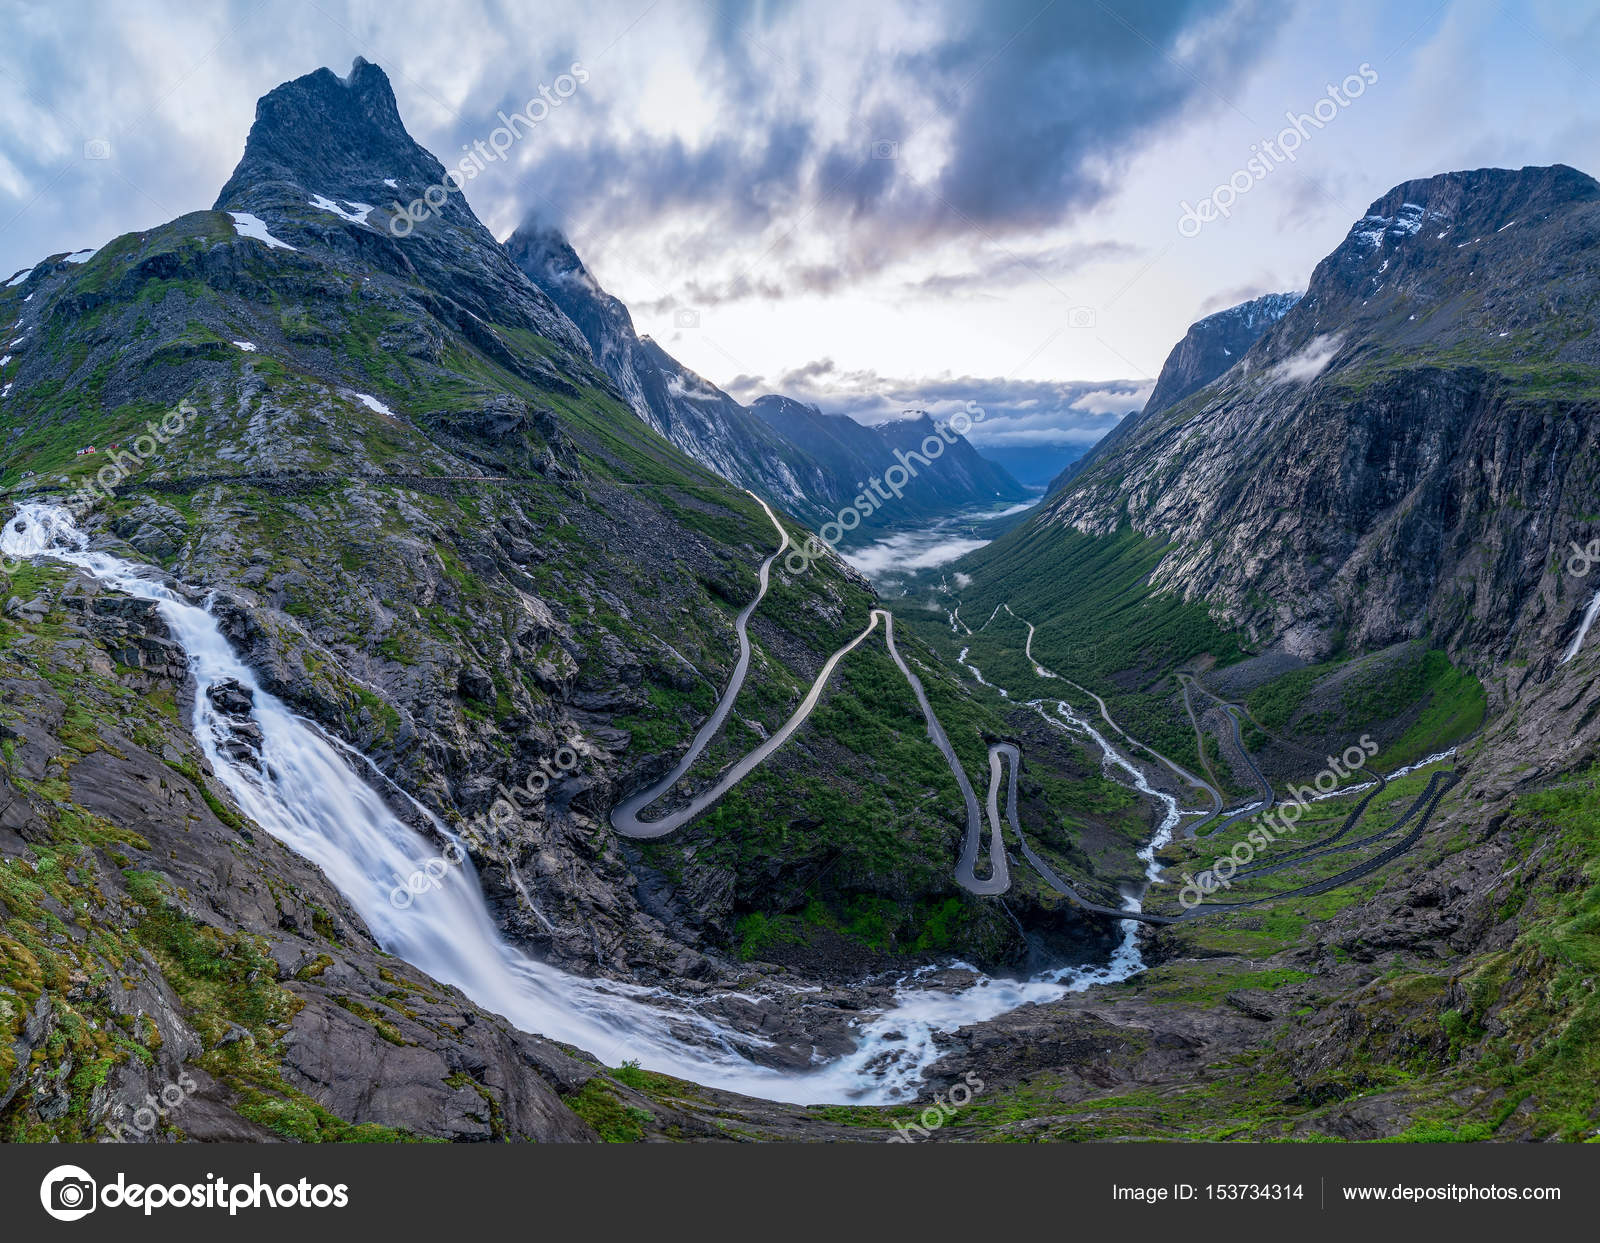 depositphotos_153734314-stock-photo-norwegian-mountain-road-trollstigen-stigfossen.jpg